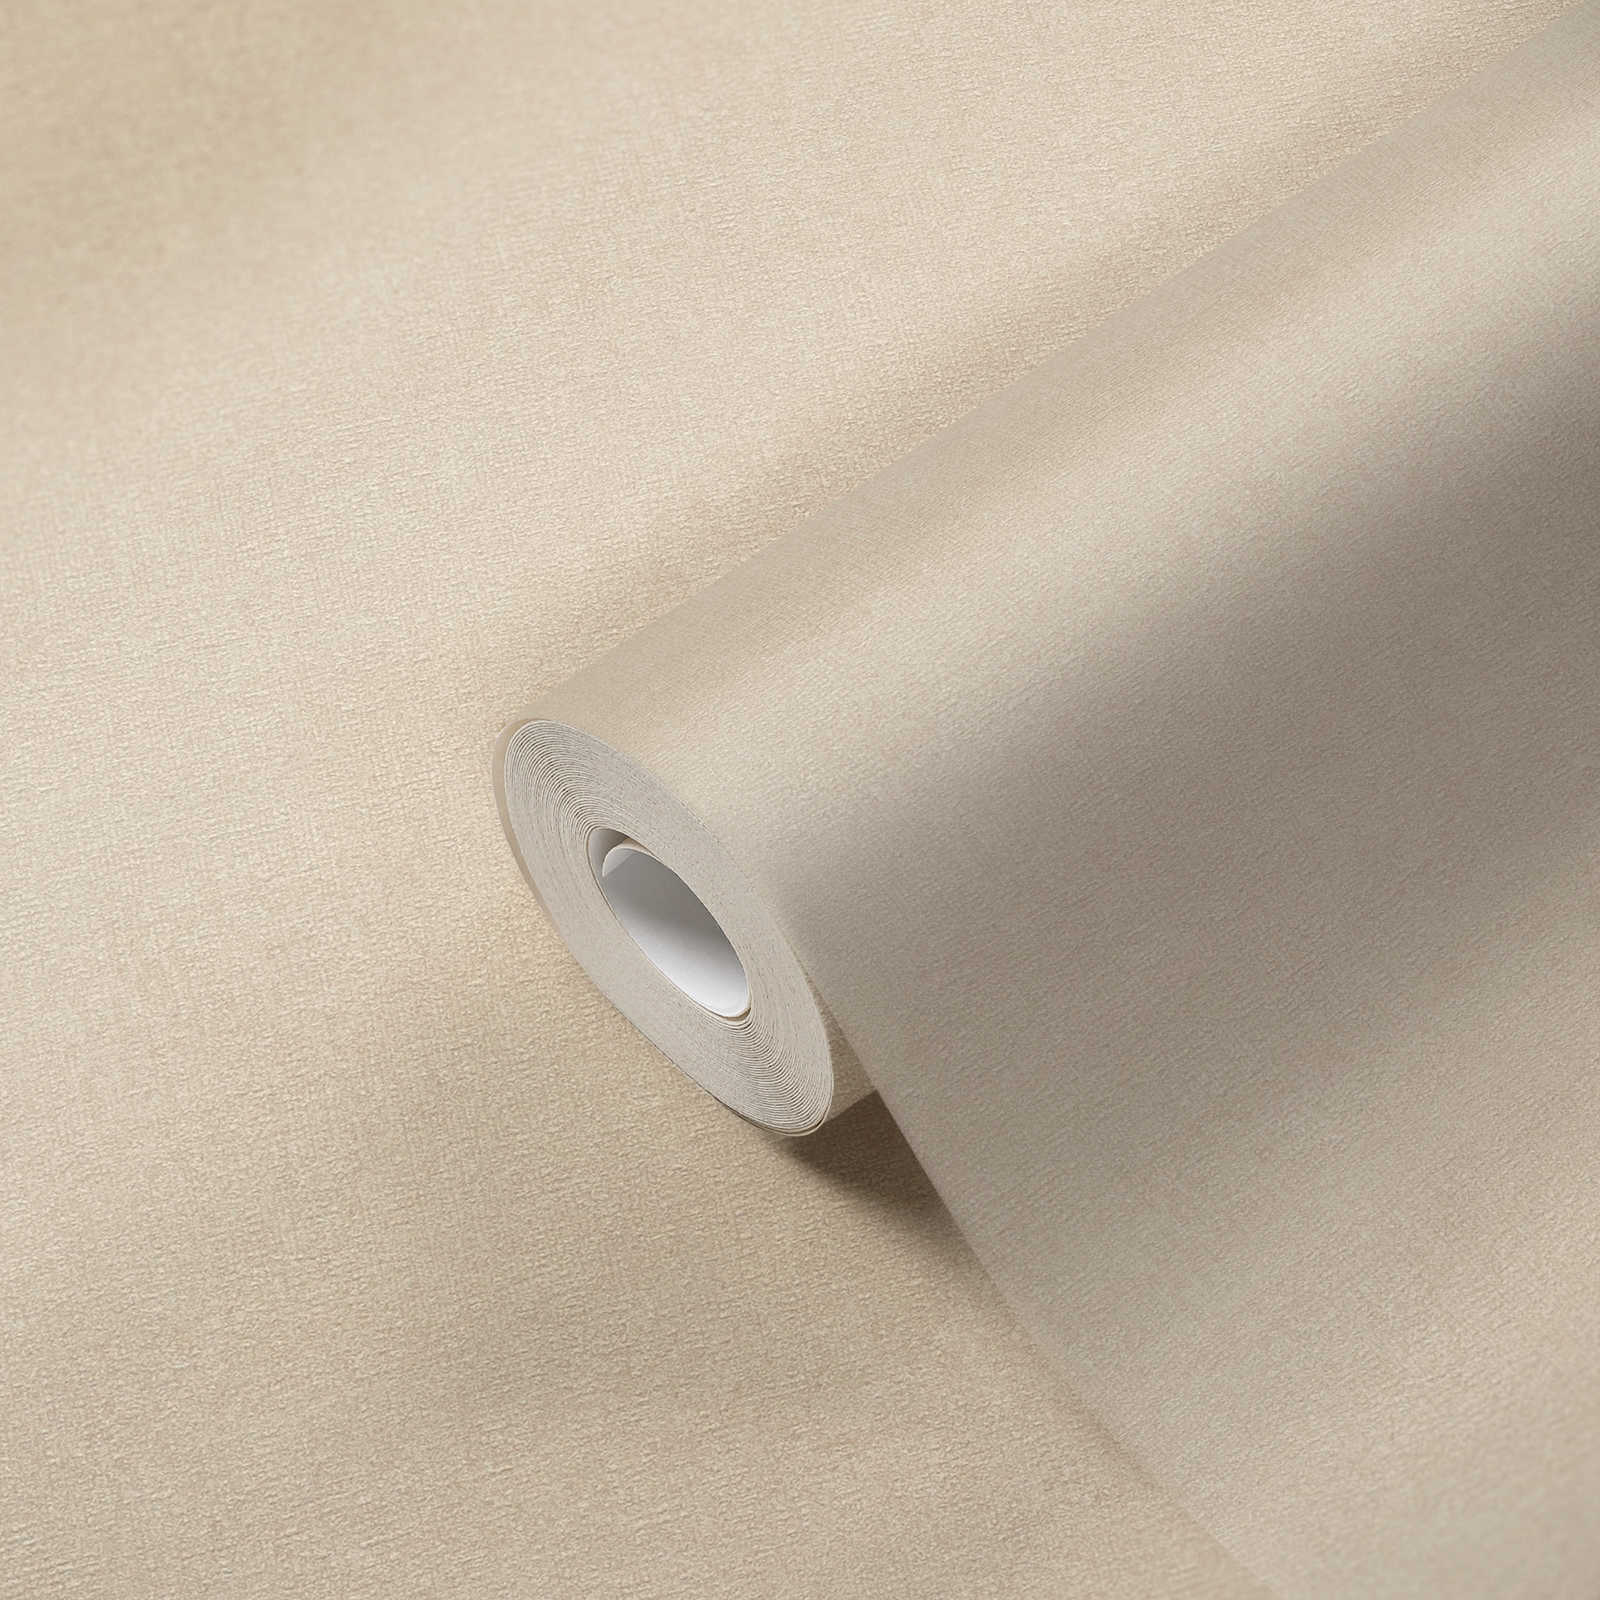             Non-woven wallpaper plains with fine structure - cream, beige
        